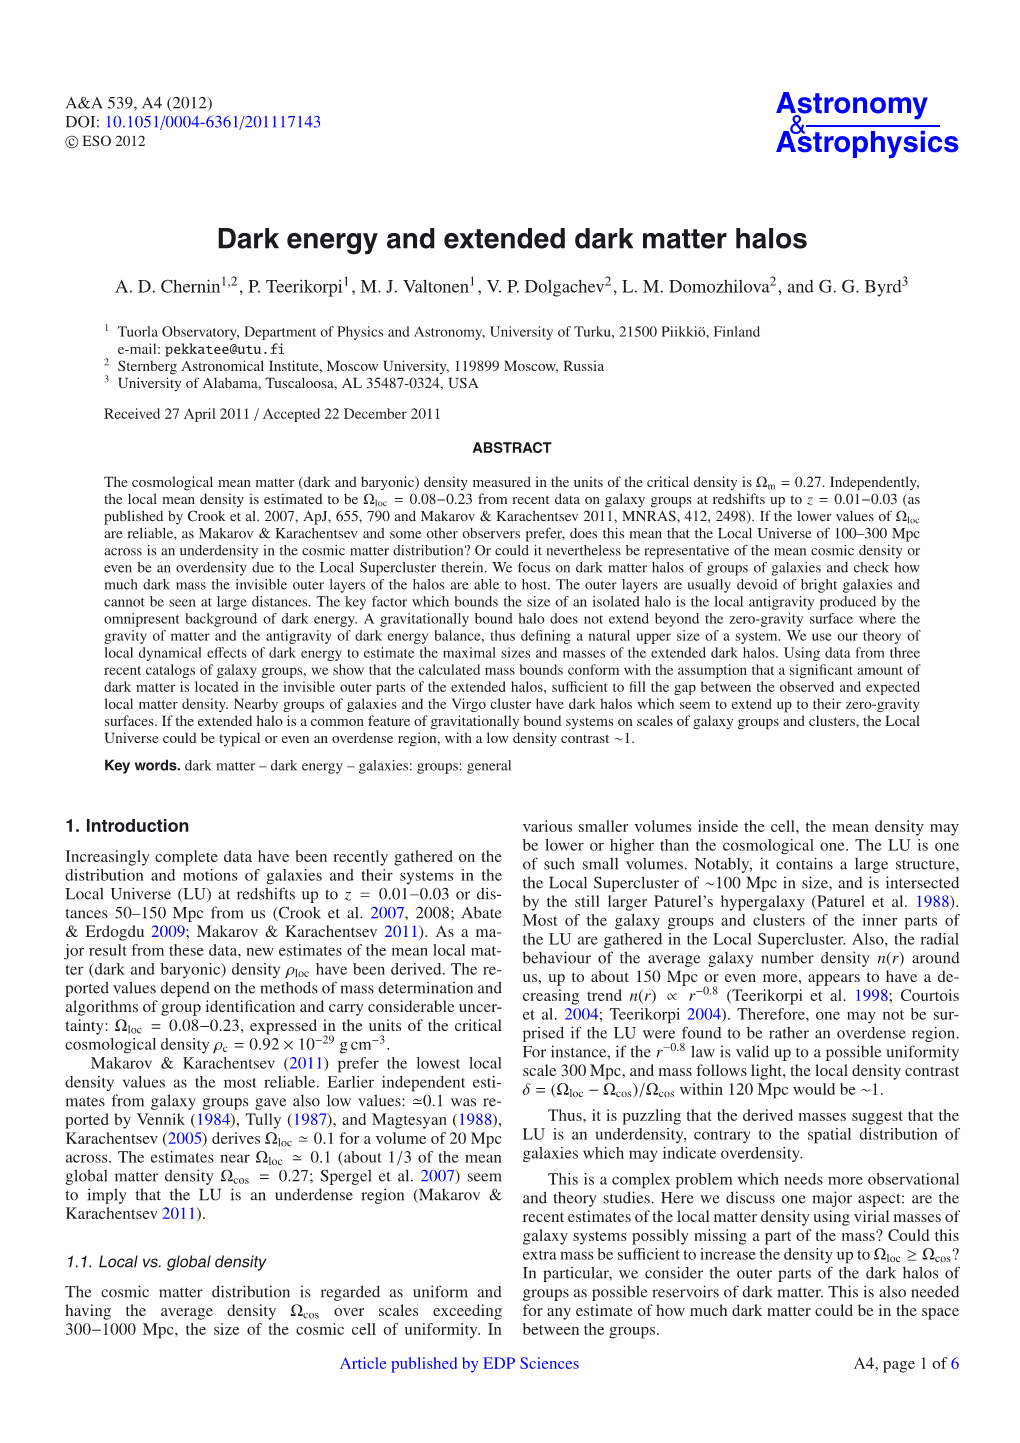 Dark Energy and Extended Dark Matter Halos